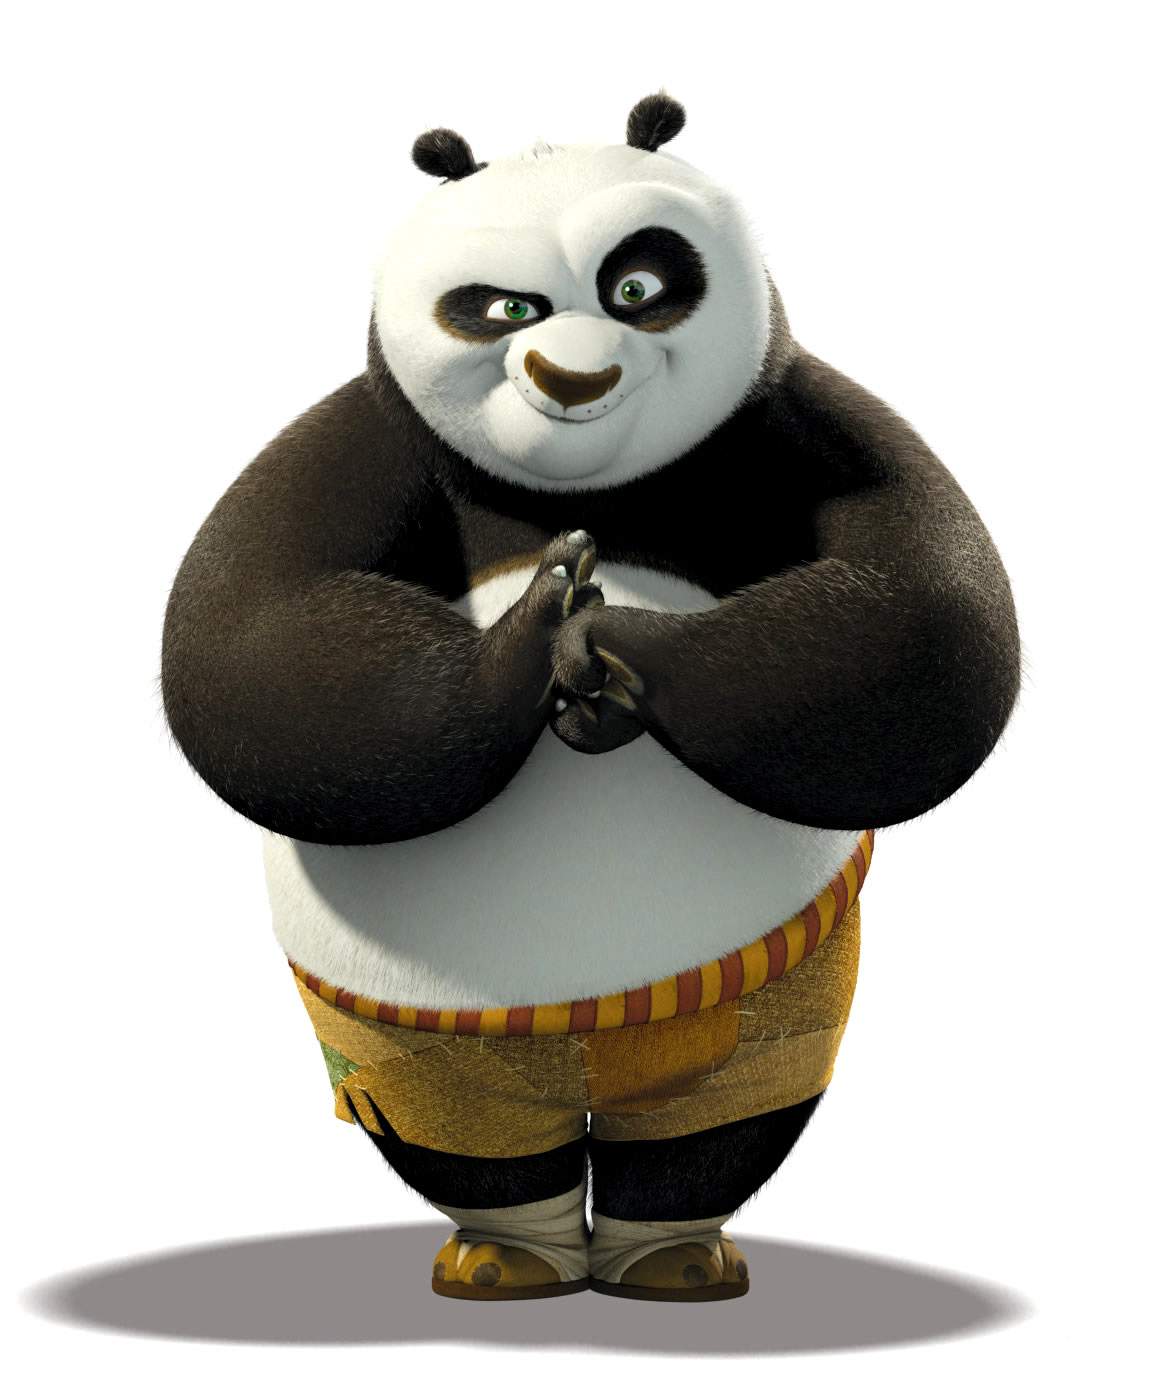 The kung fu panda image cover